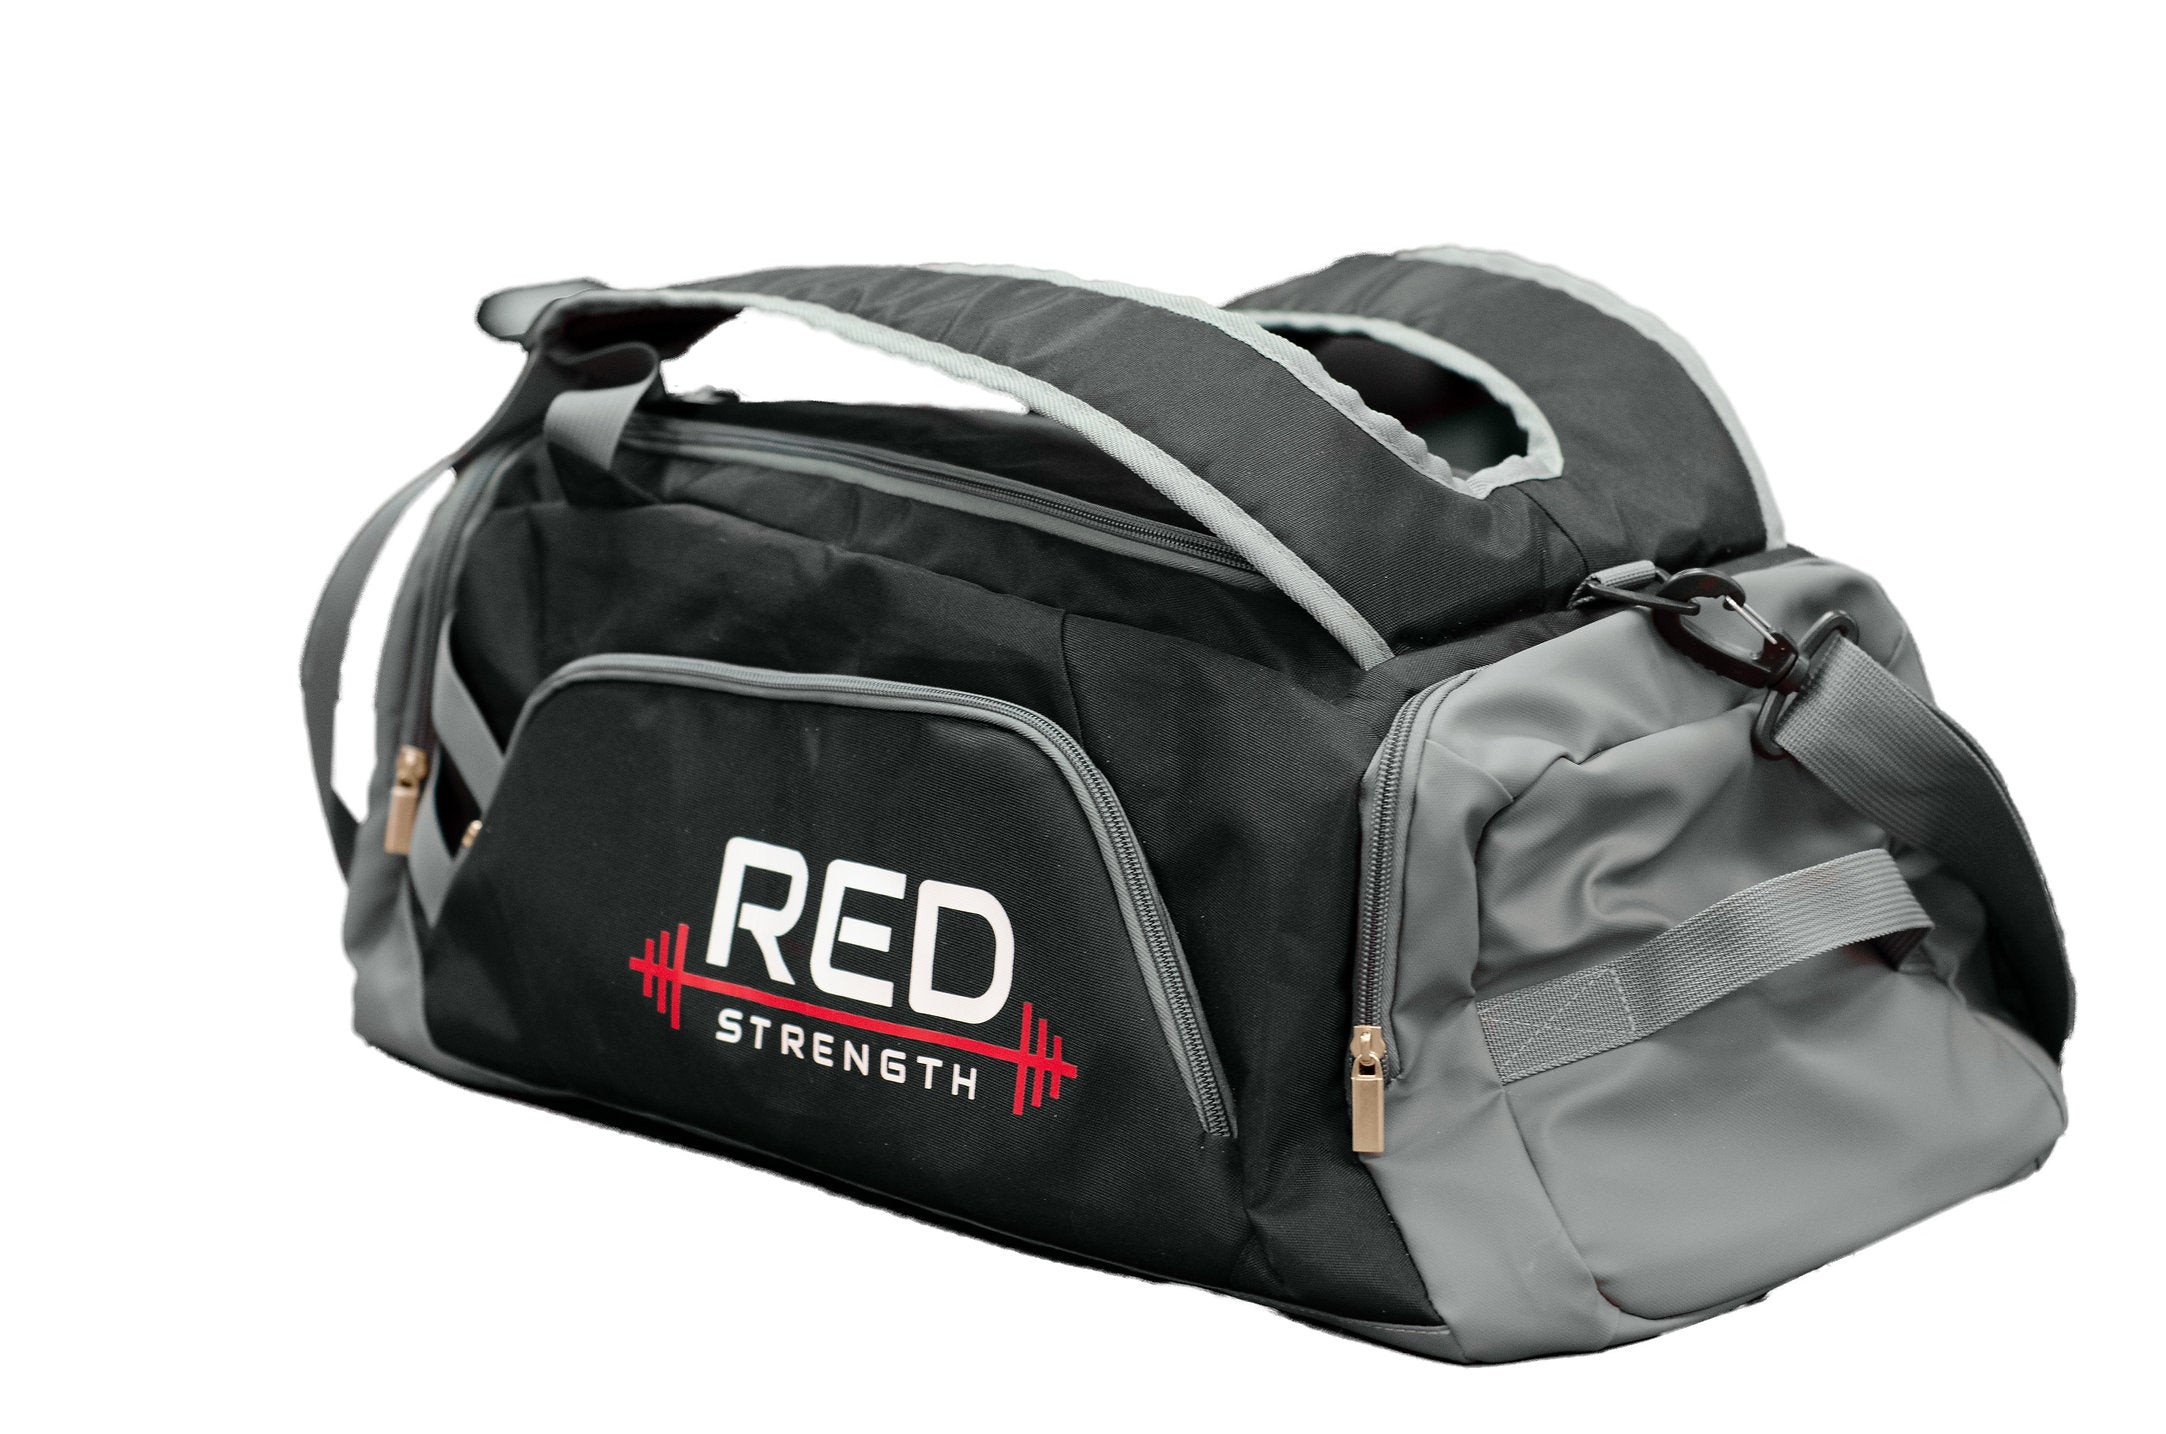 RED Strength Signature Bag